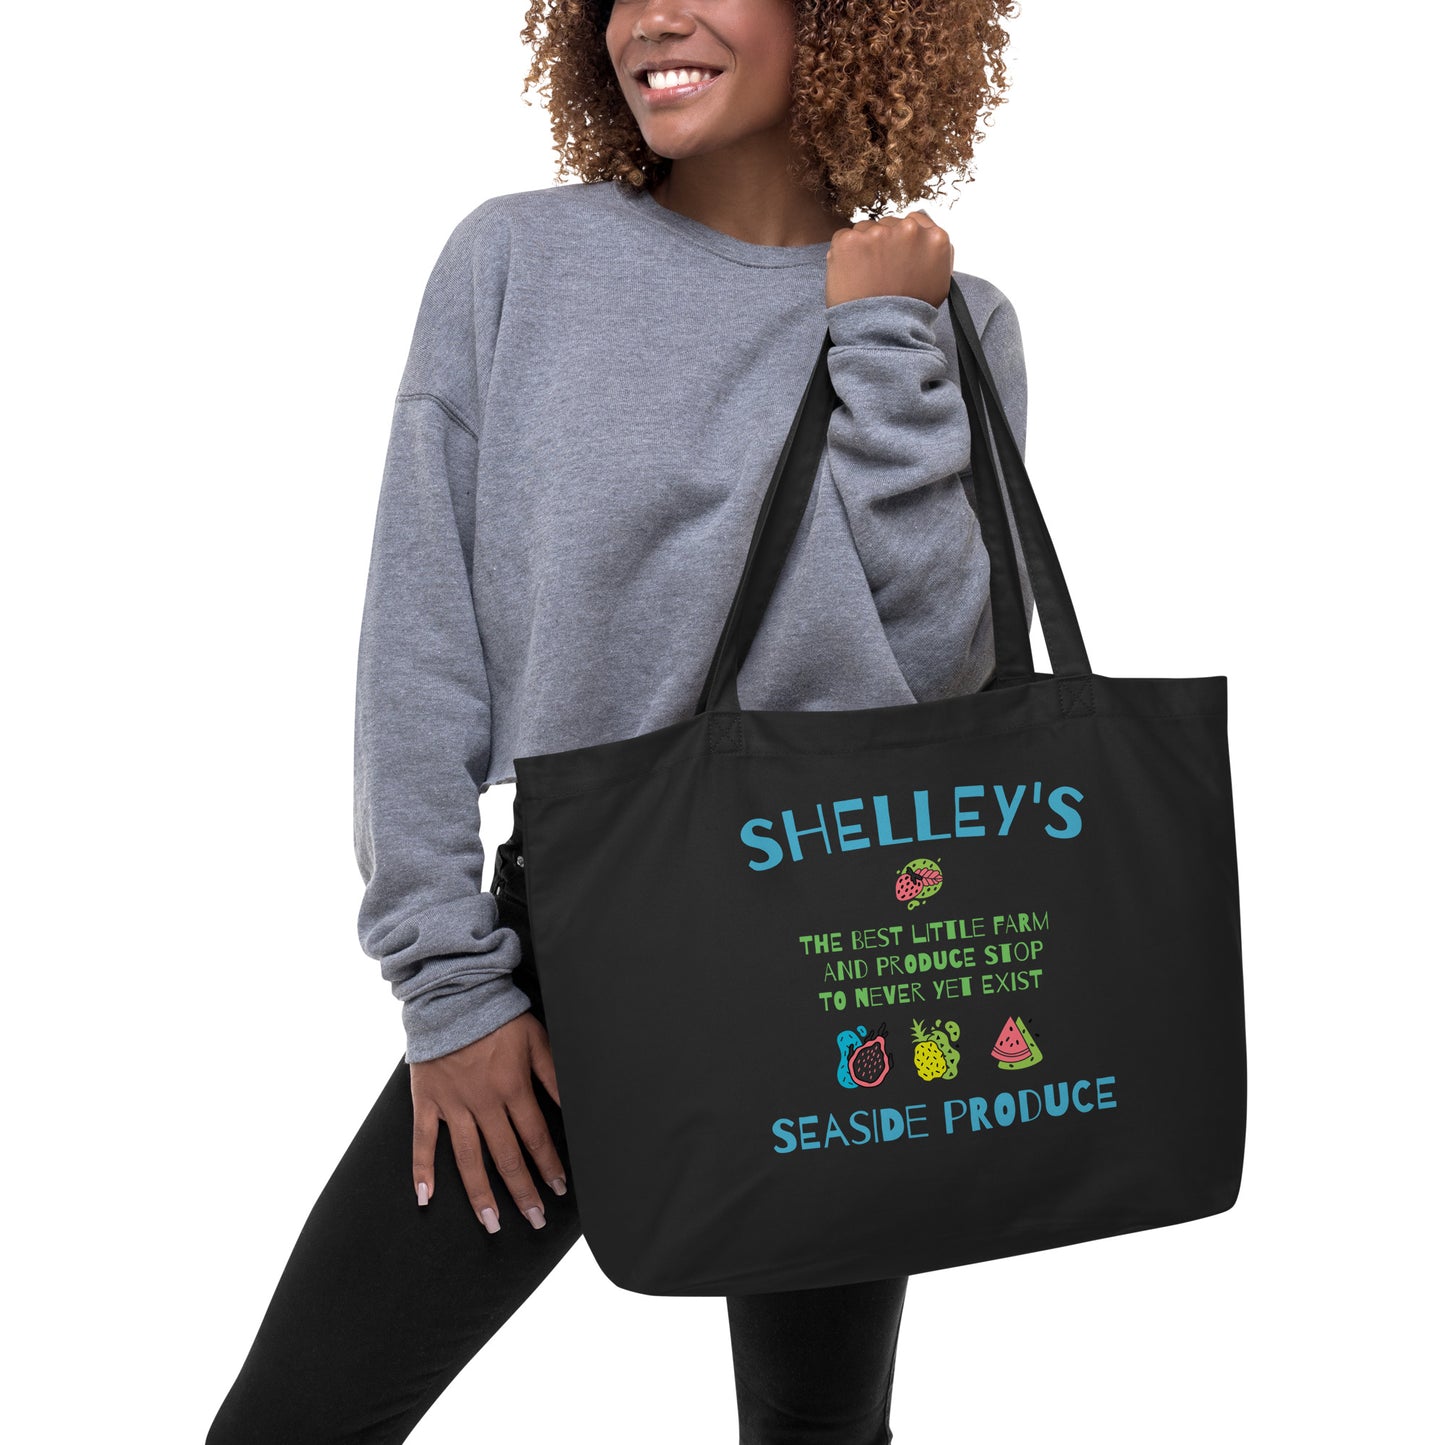 “Shelley’s” Large organic tote bag